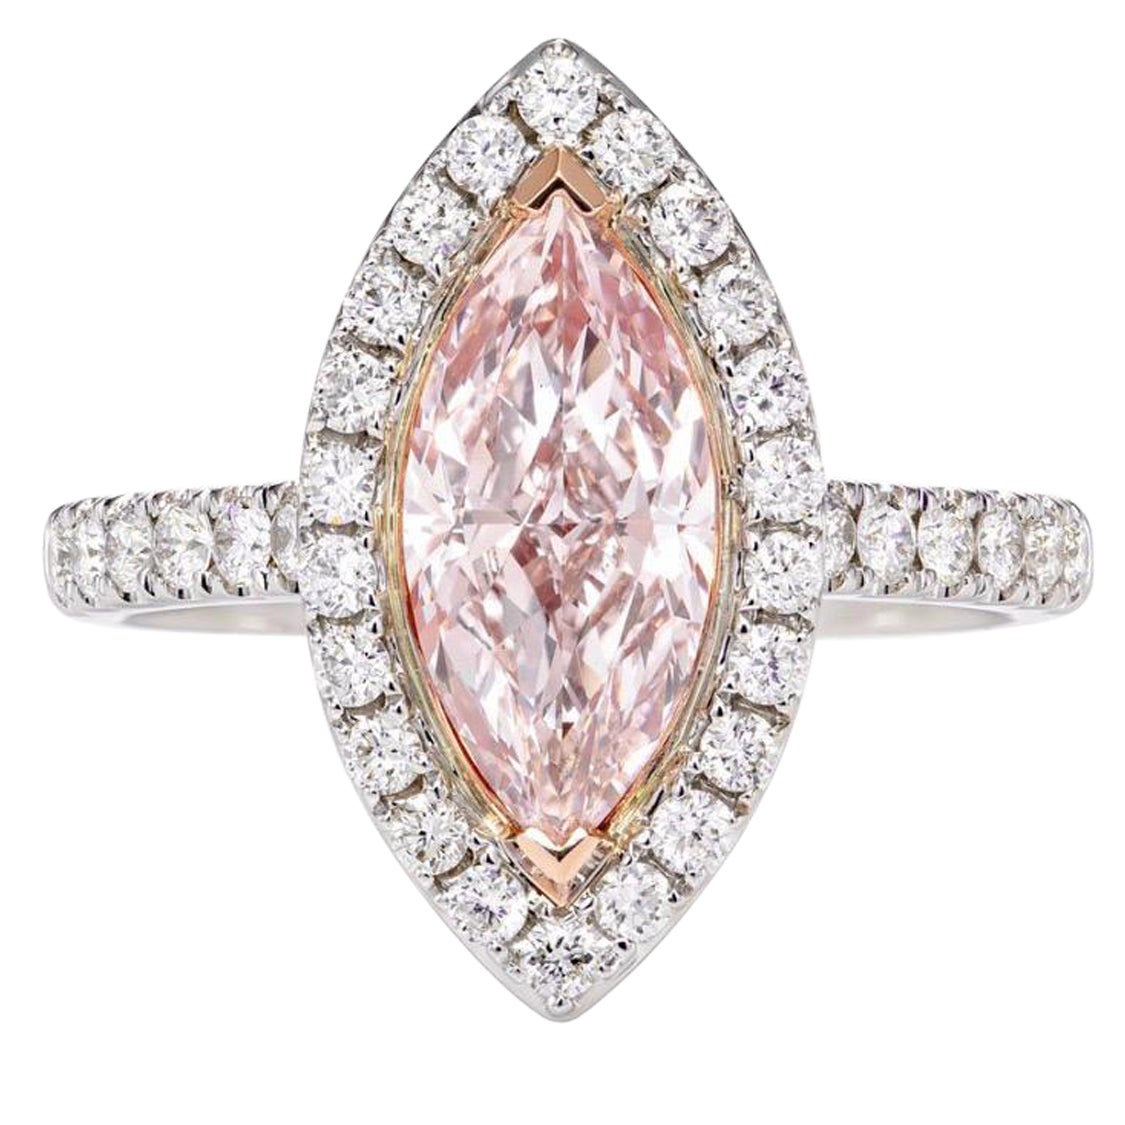 Emilio Schmuck GIA zertifiziert 2,40 Karat Pink Diamond Ring